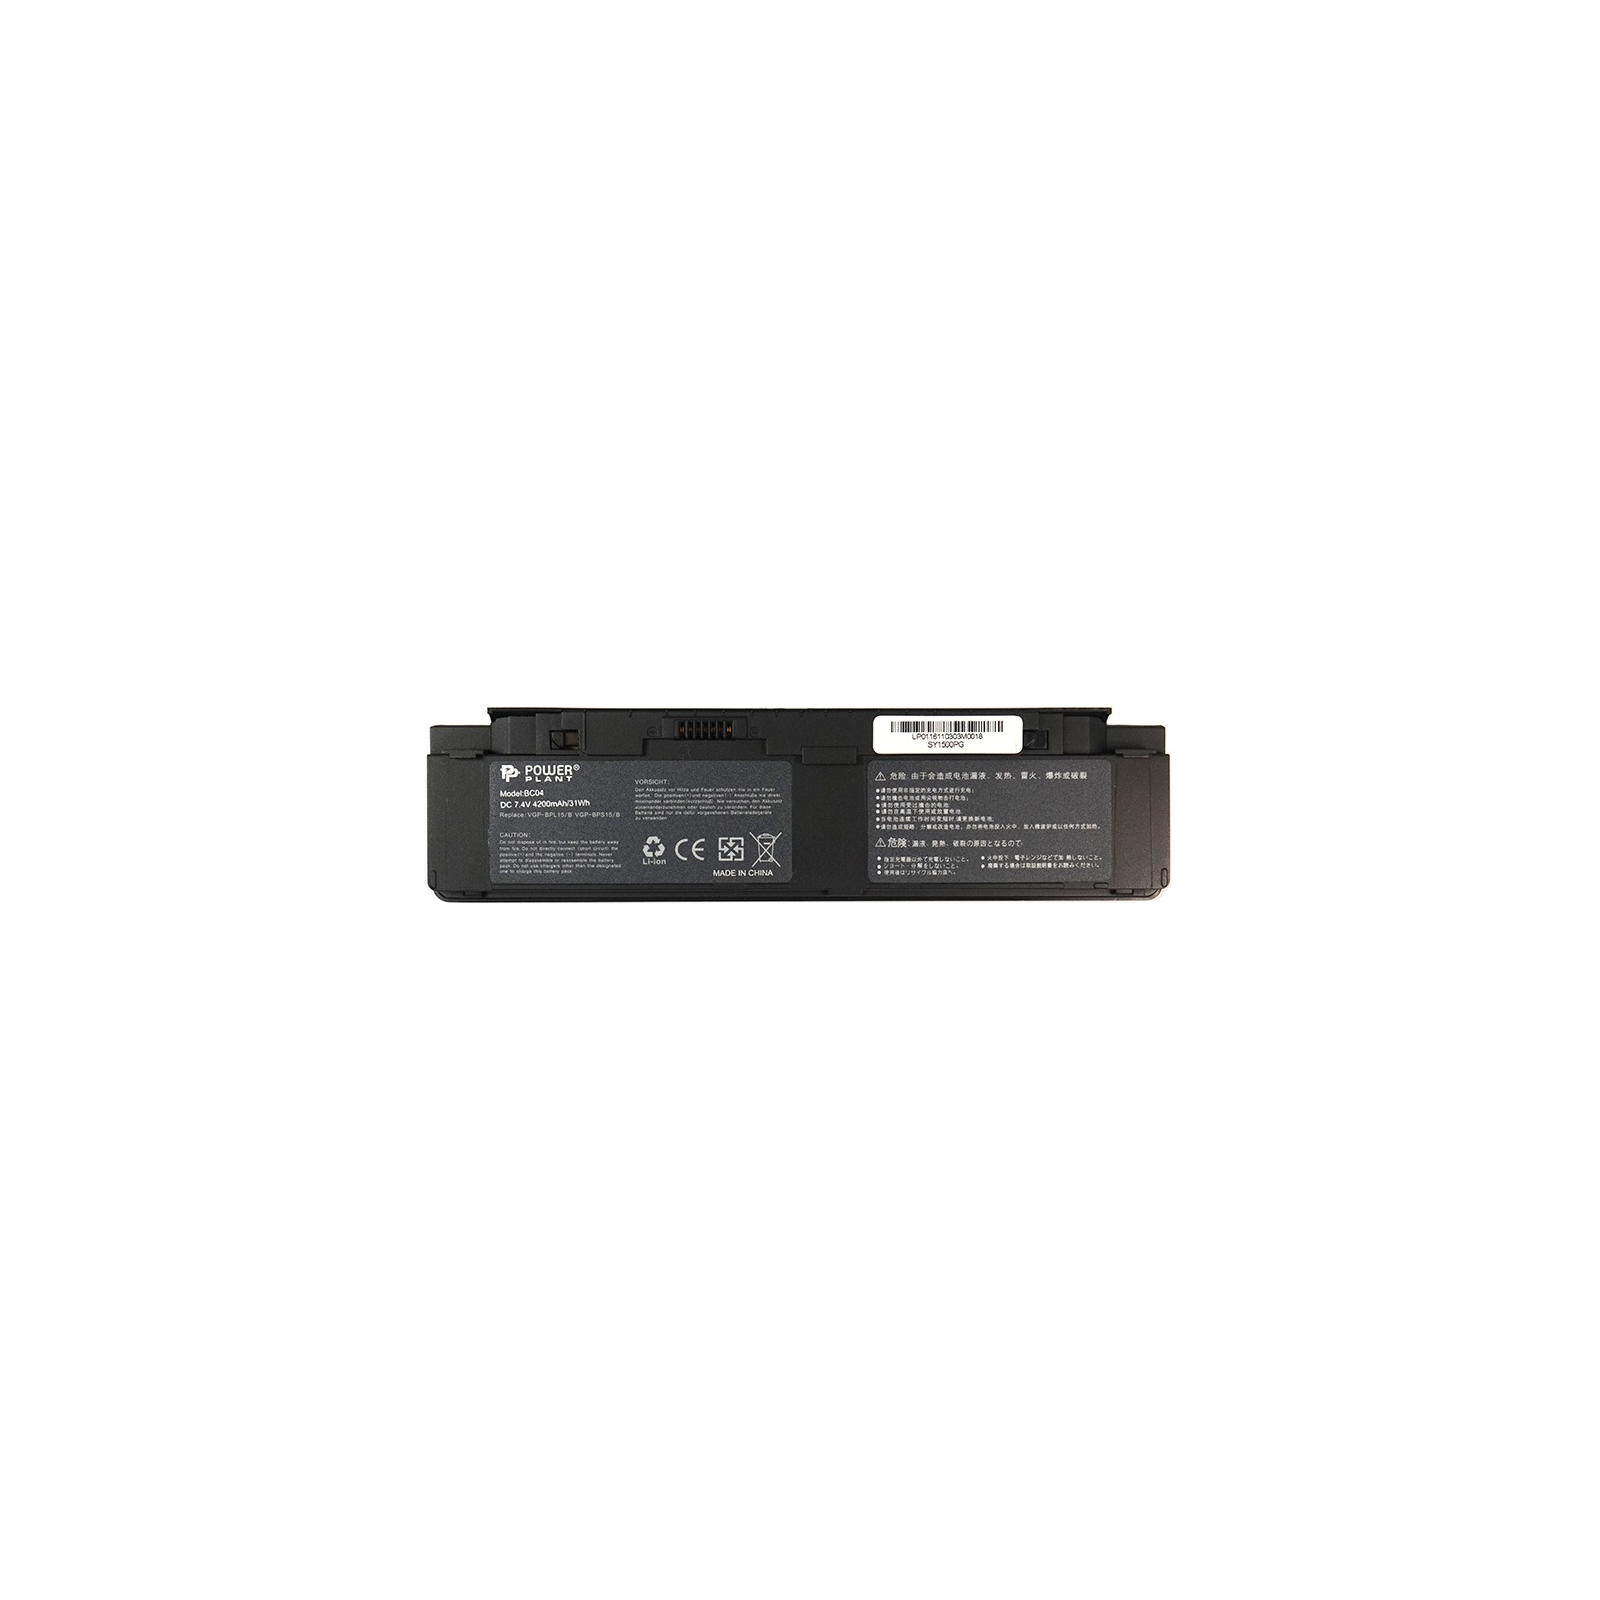 Аккумулятор для ноутбука SONY VAIO VGP-BPL15/B (VGN-P31ZK/R) 7.4V 4200mAh PowerPlant (NB520053)